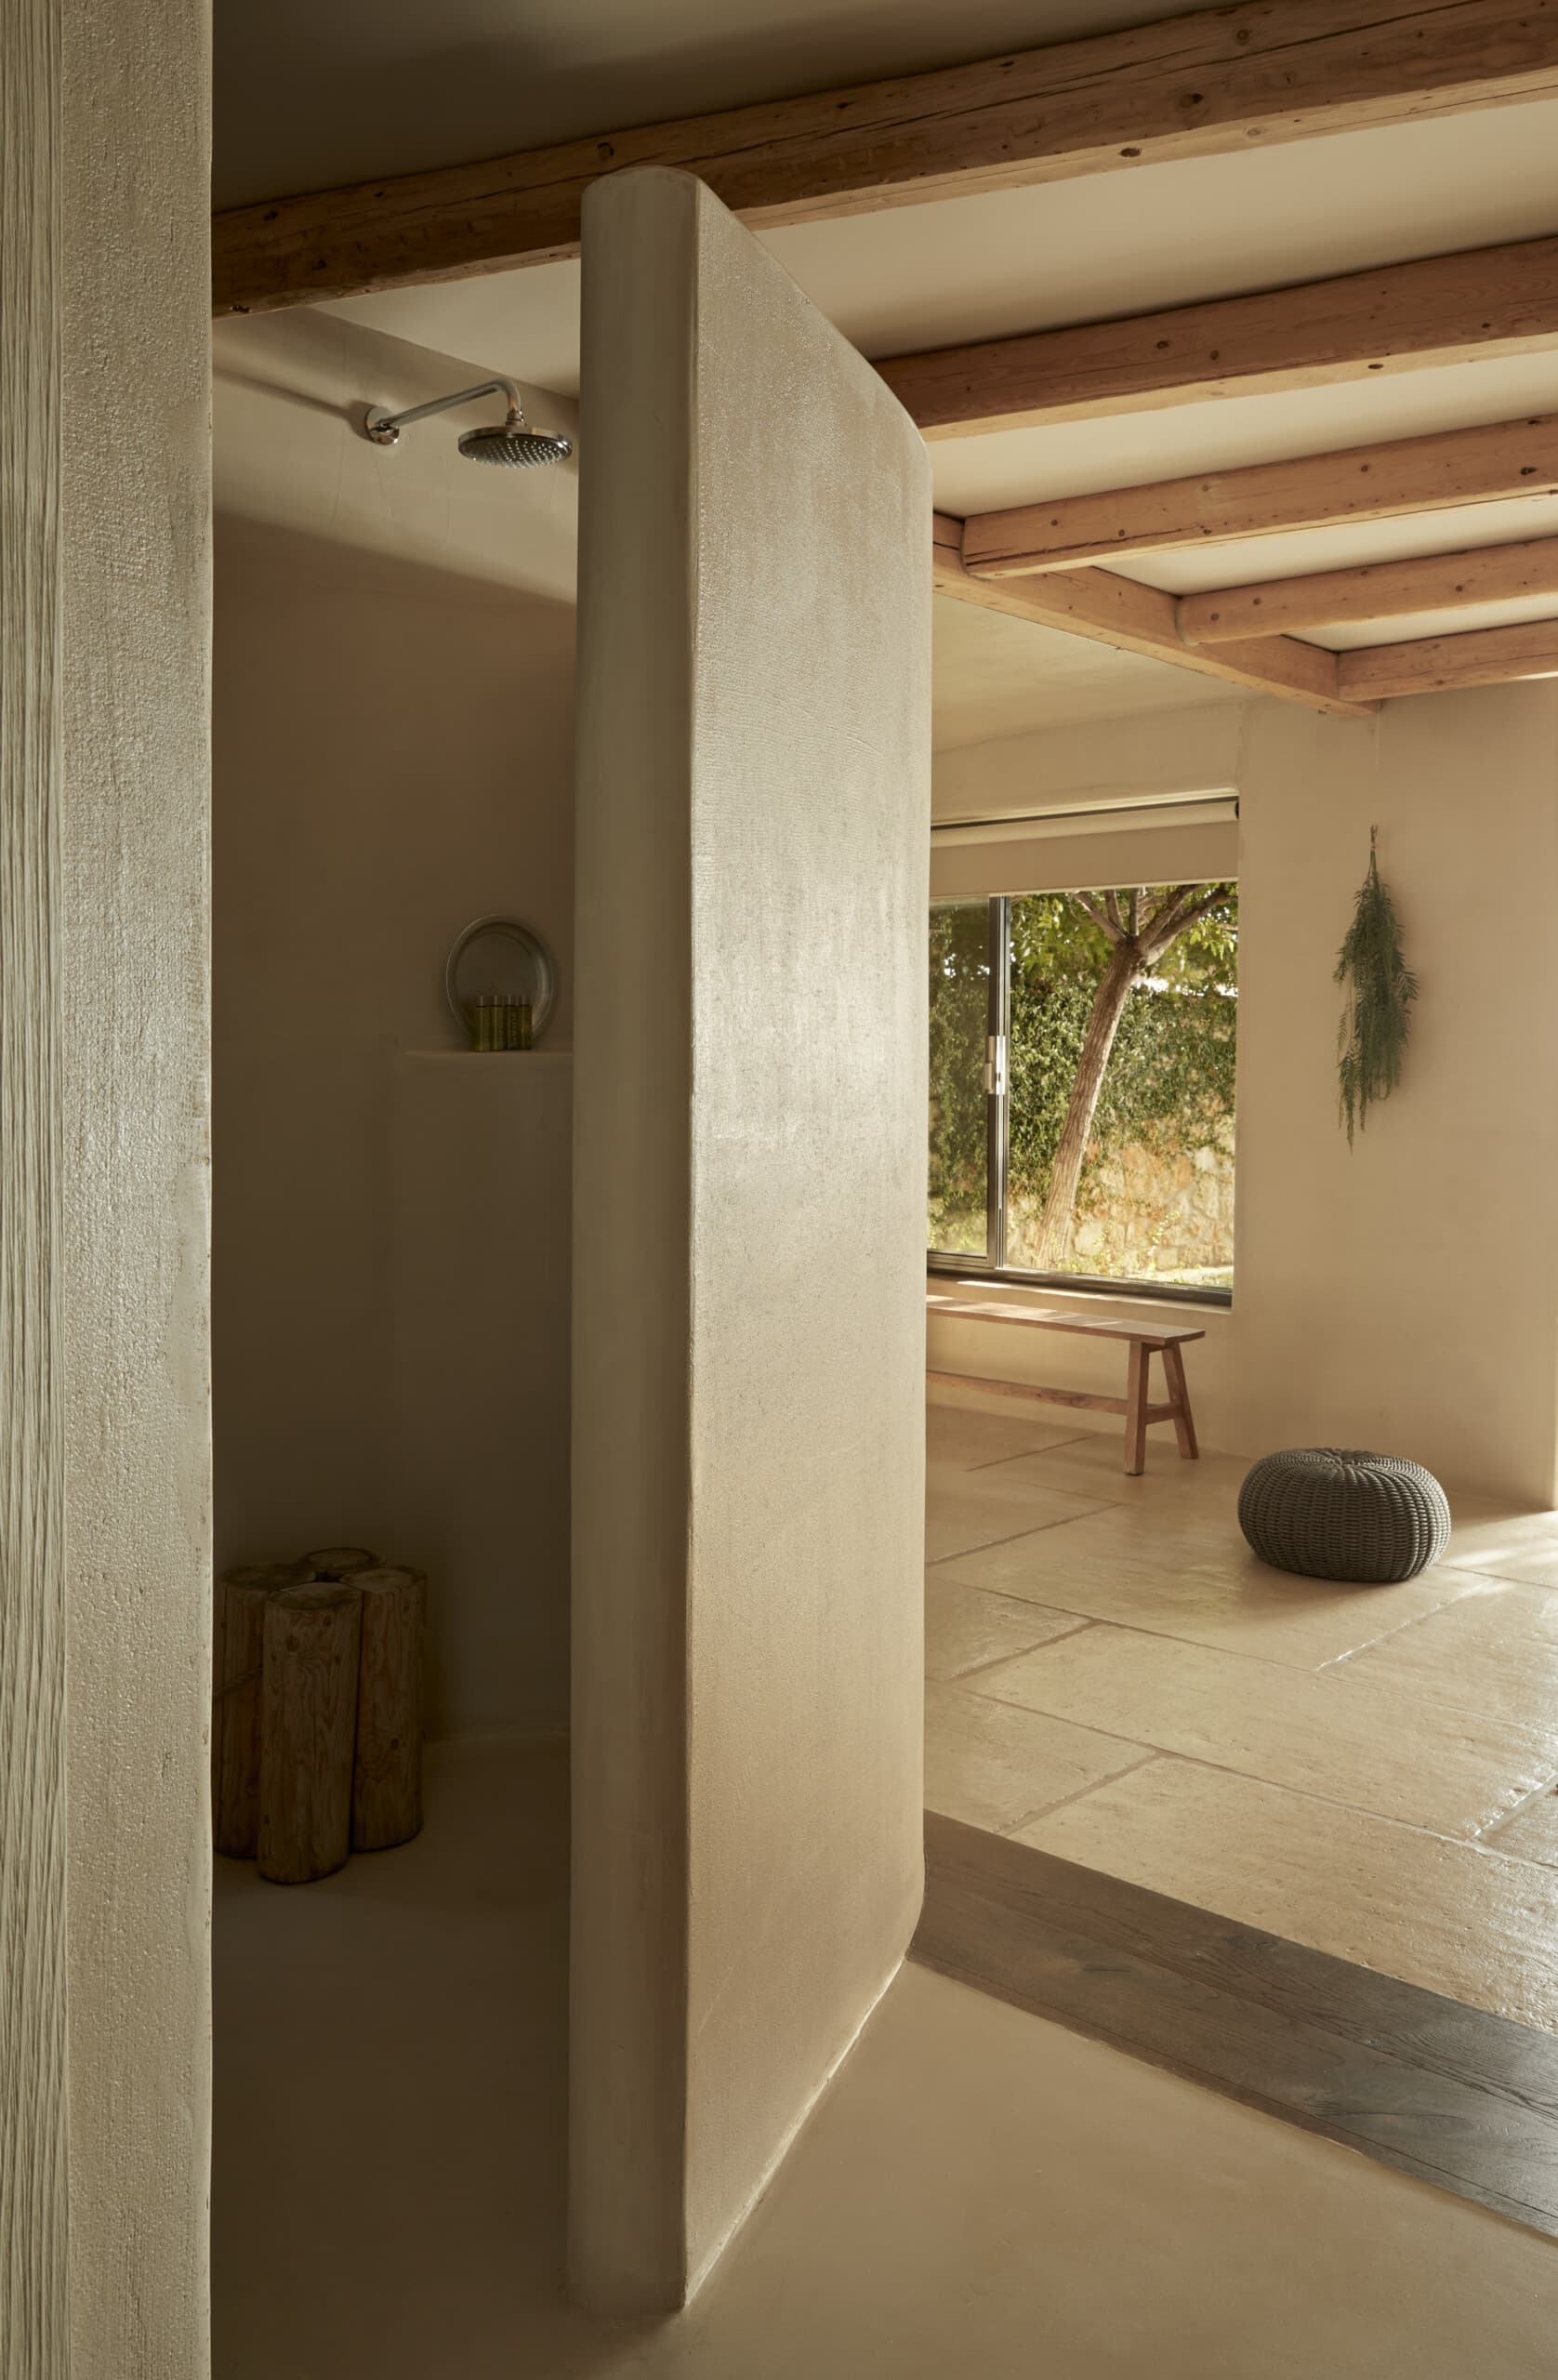 Luxury accommodation design in a wellness retreat